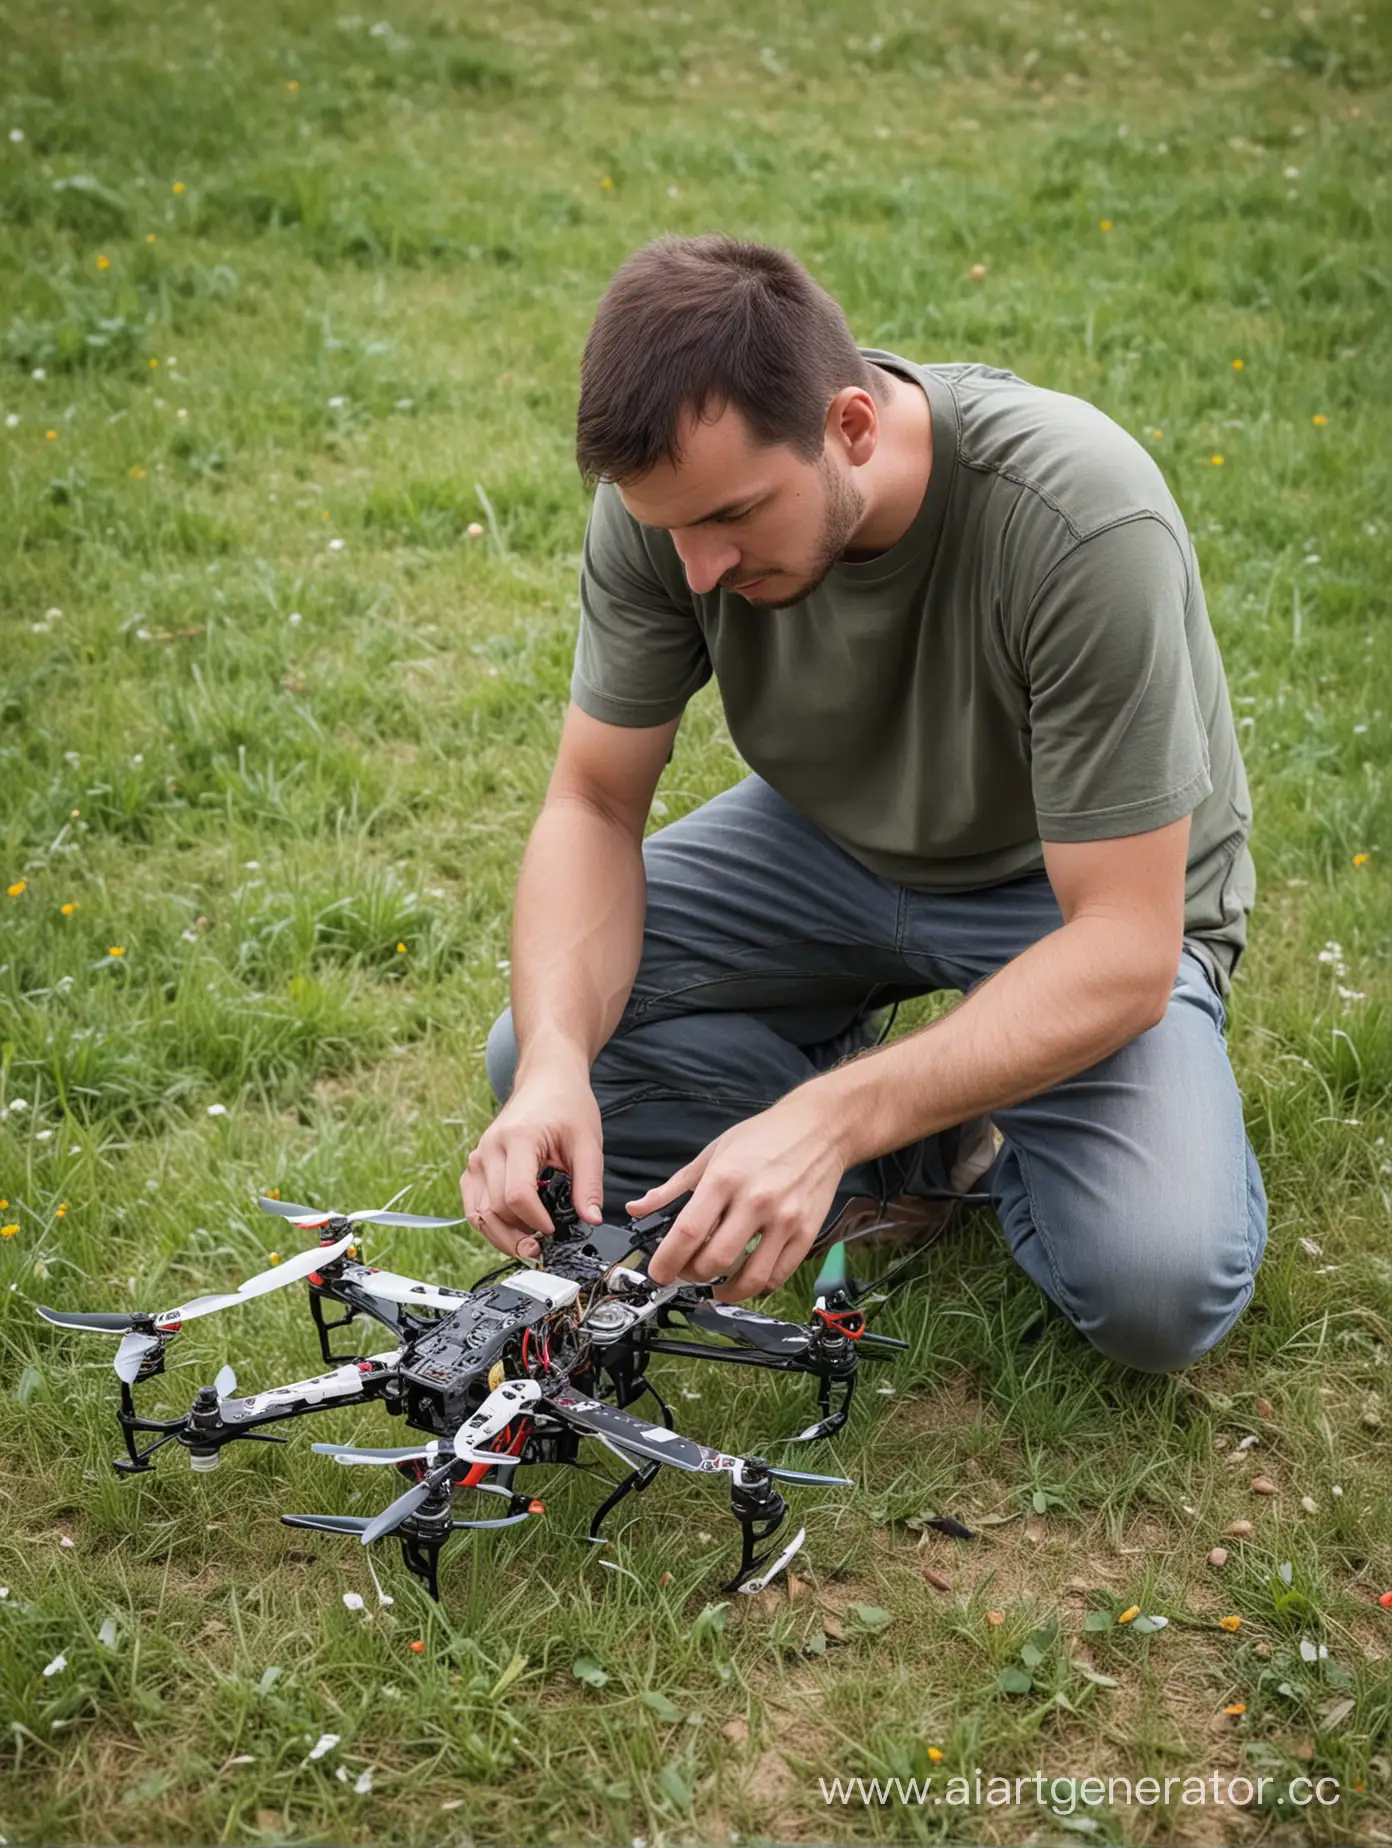 Man-Repairing-Quadcopter-Skilled-Technician-Fixes-Drone